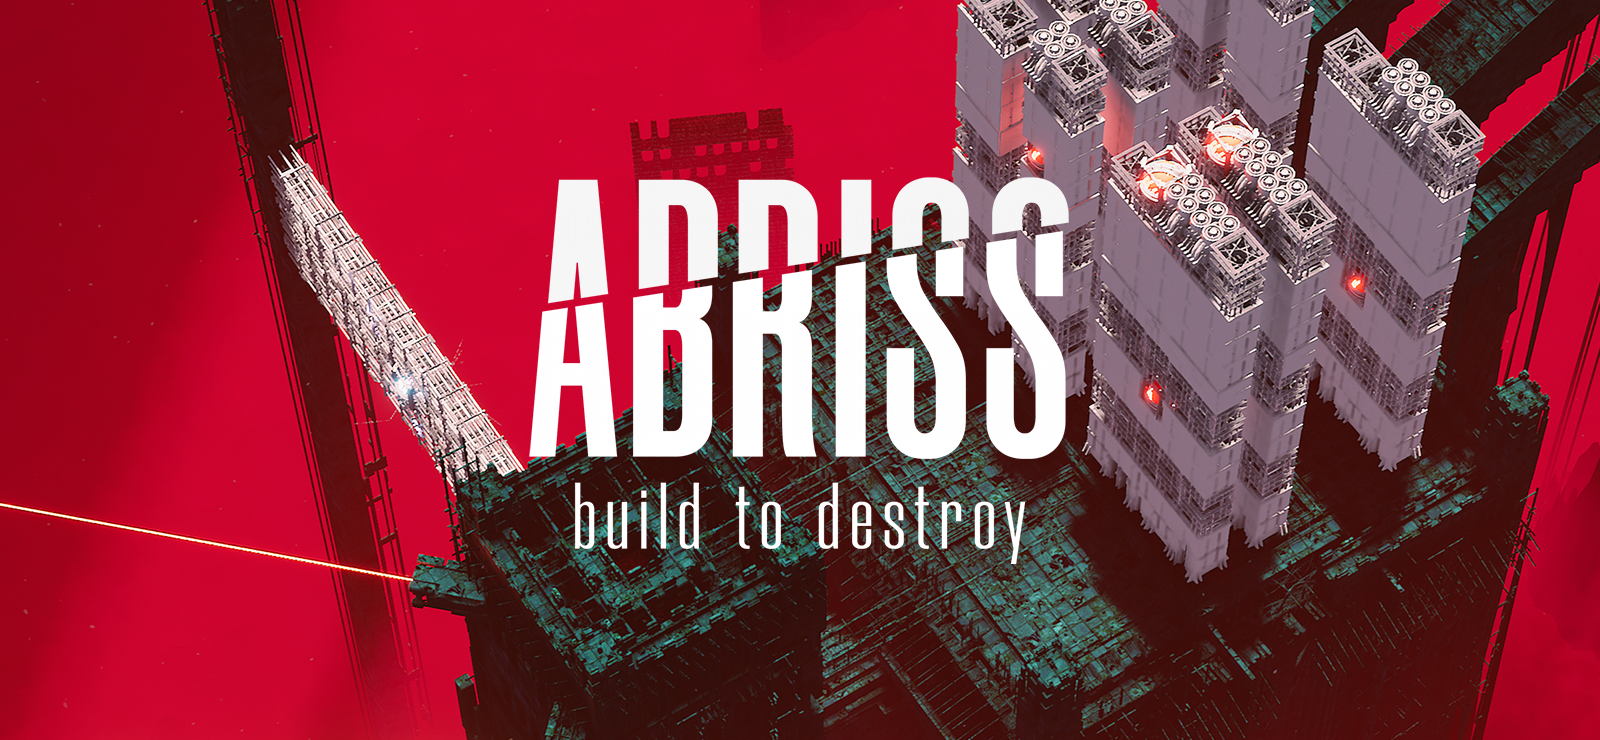 ABRISS - Build To Destroy